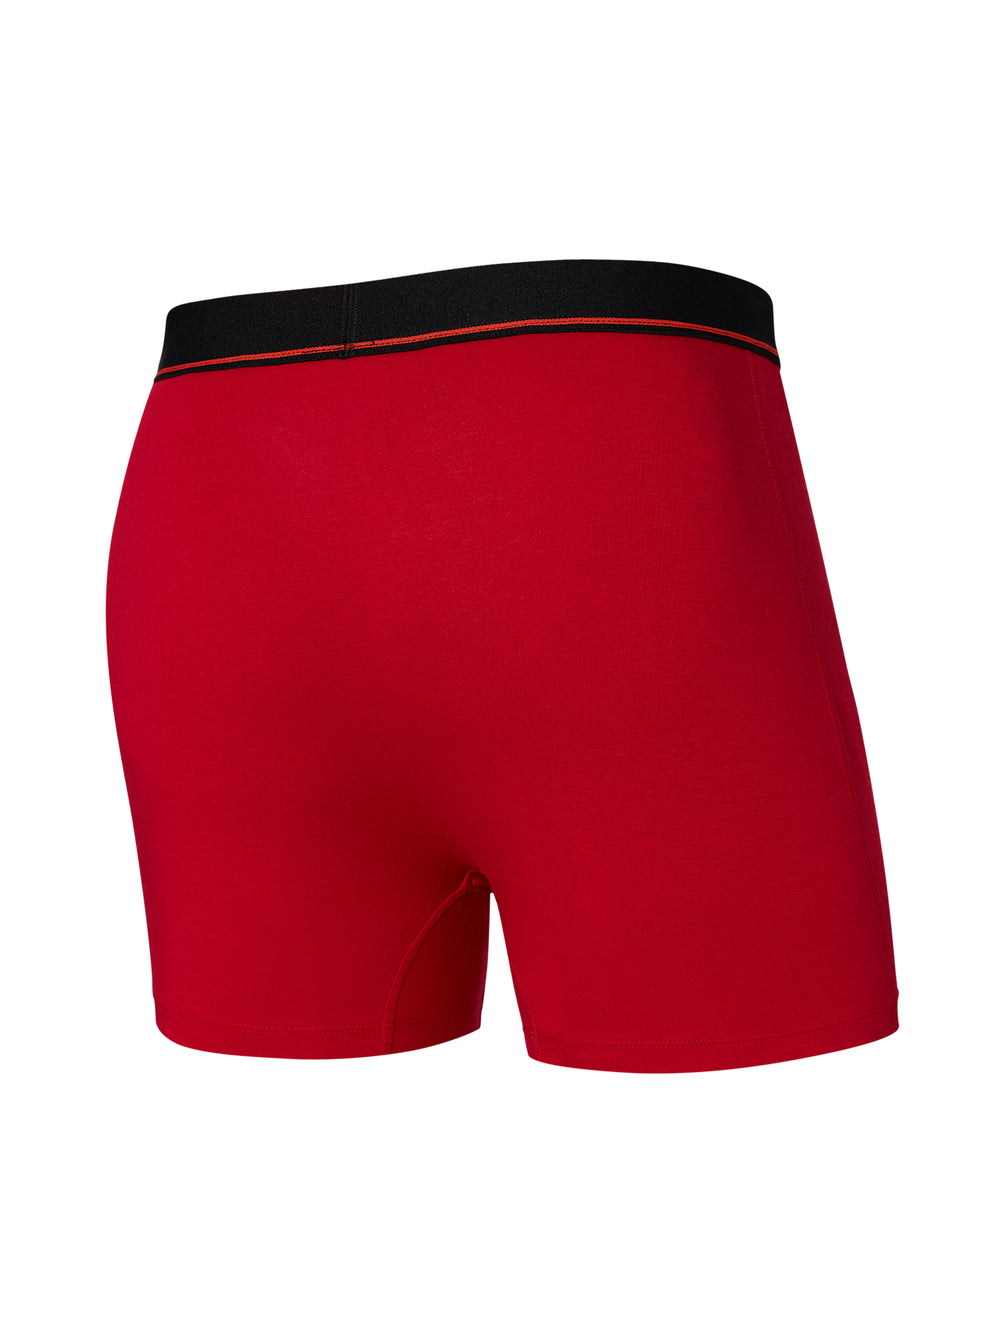 SAXX Men's Vibe Boxer Brief Underwear - Red No Thank You Size M